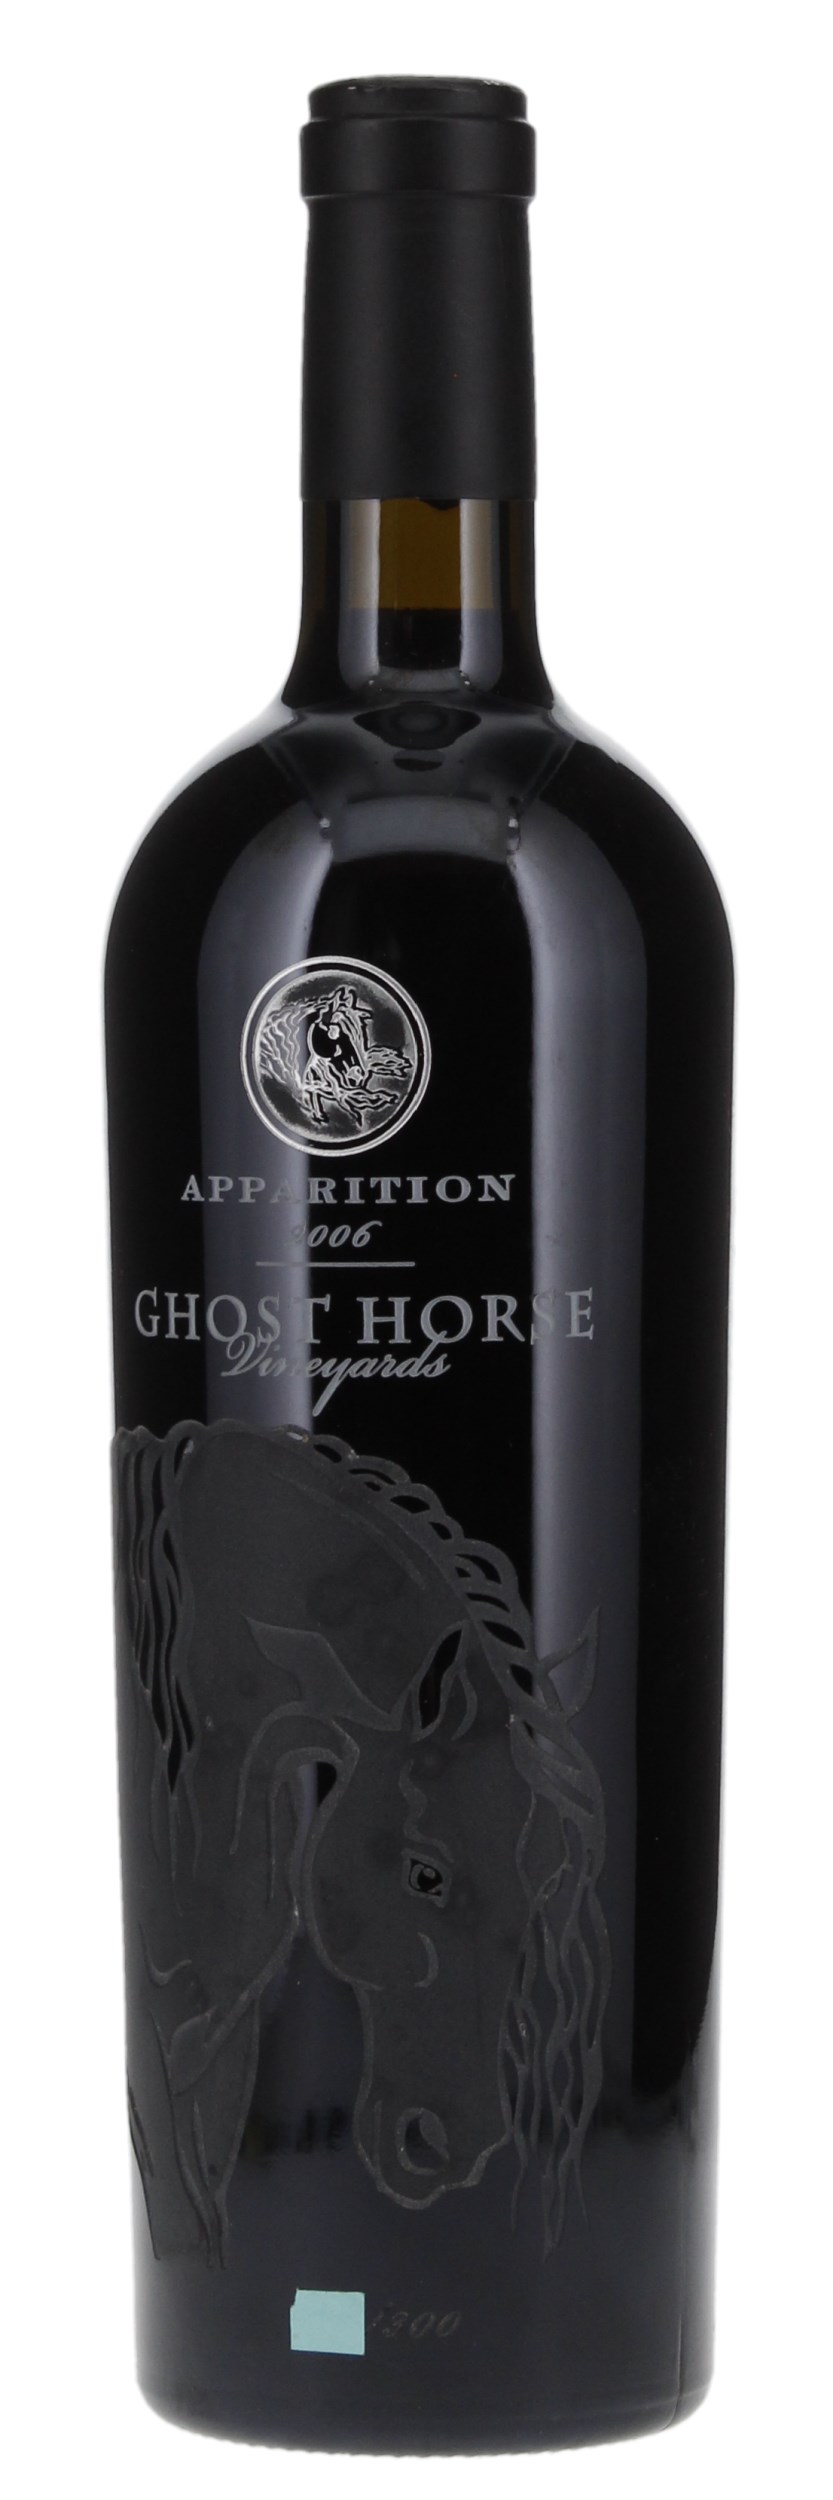 2006 Ghost Horse Vineyard Apparition Cabernet Sauvignon, 750ml